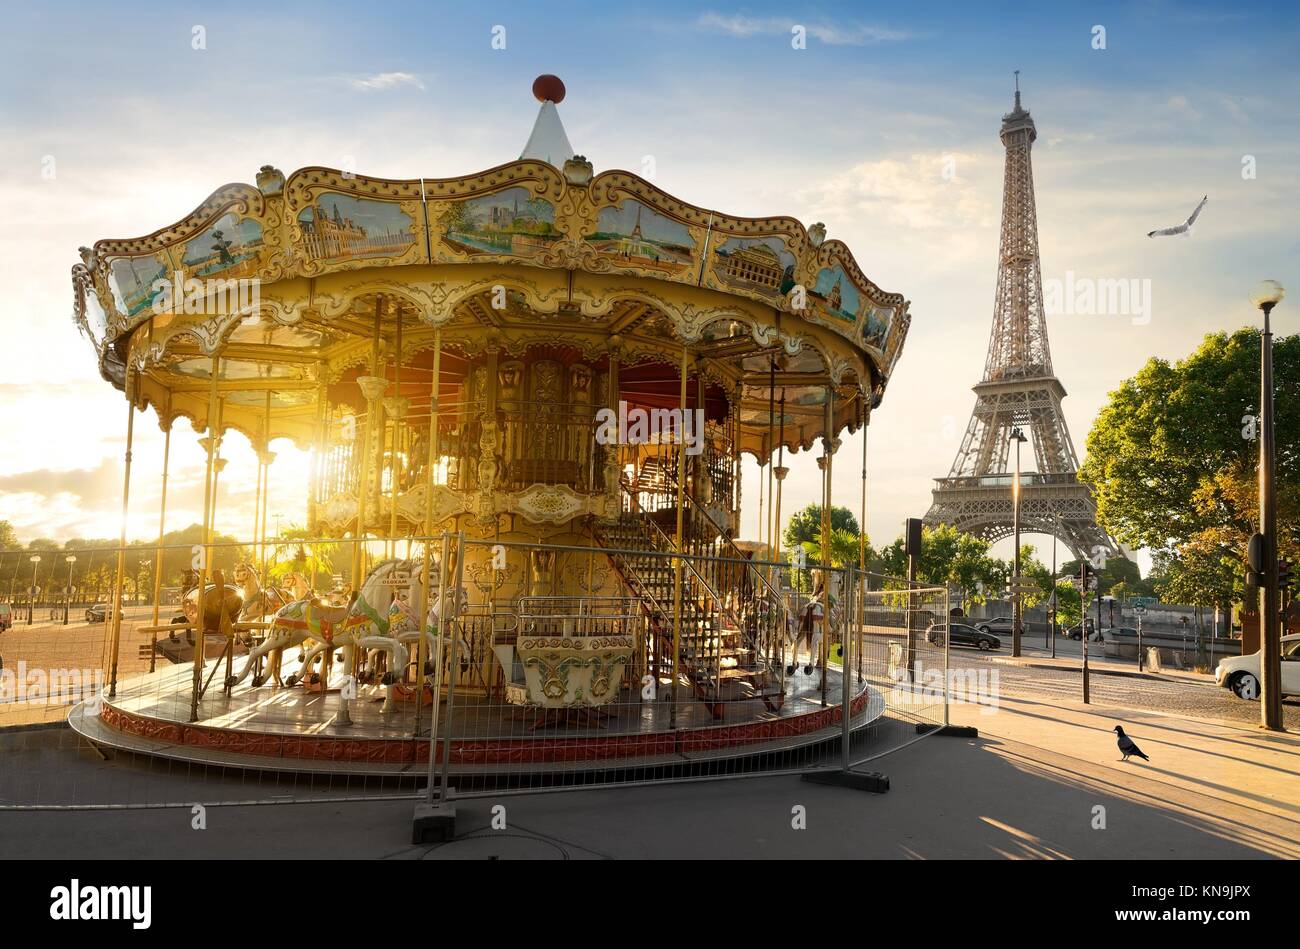 Carousel in park near the Eiffel tower in Paris. Stock Photo